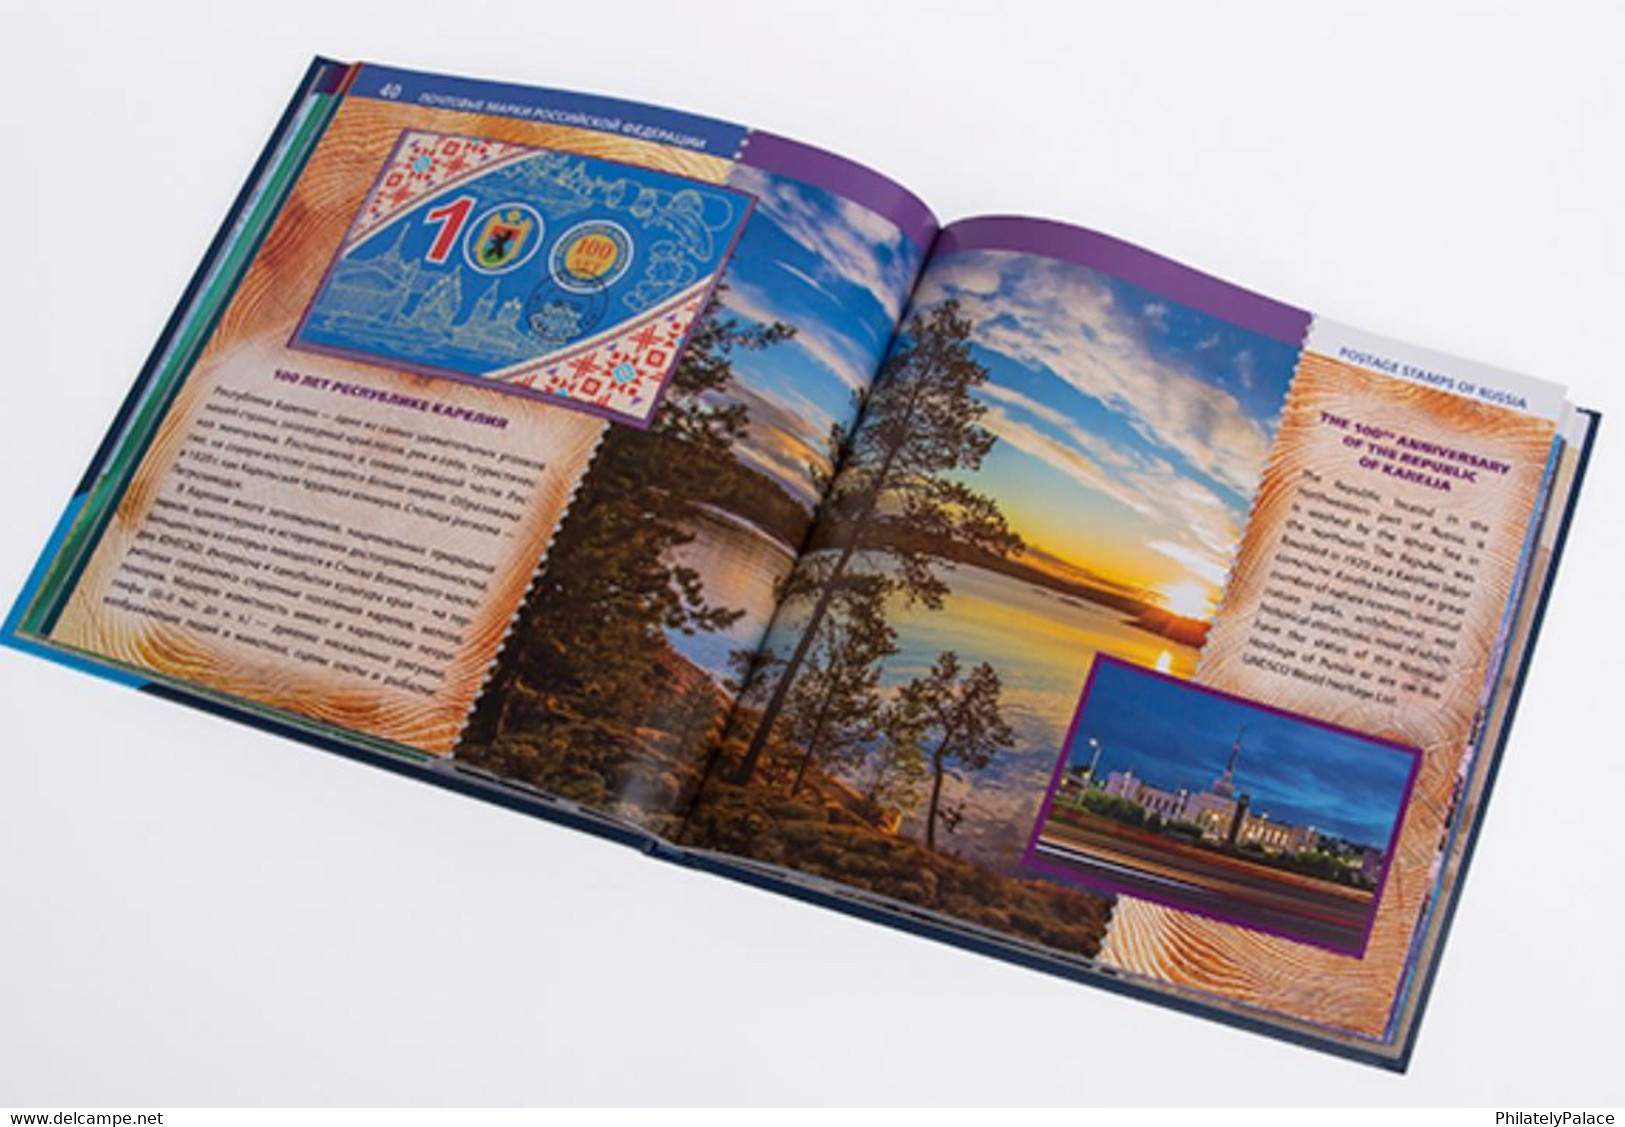 RUSSIA 2020 Souvenir Album Historical Heritage On State Signs (**) - Cartas & Documentos